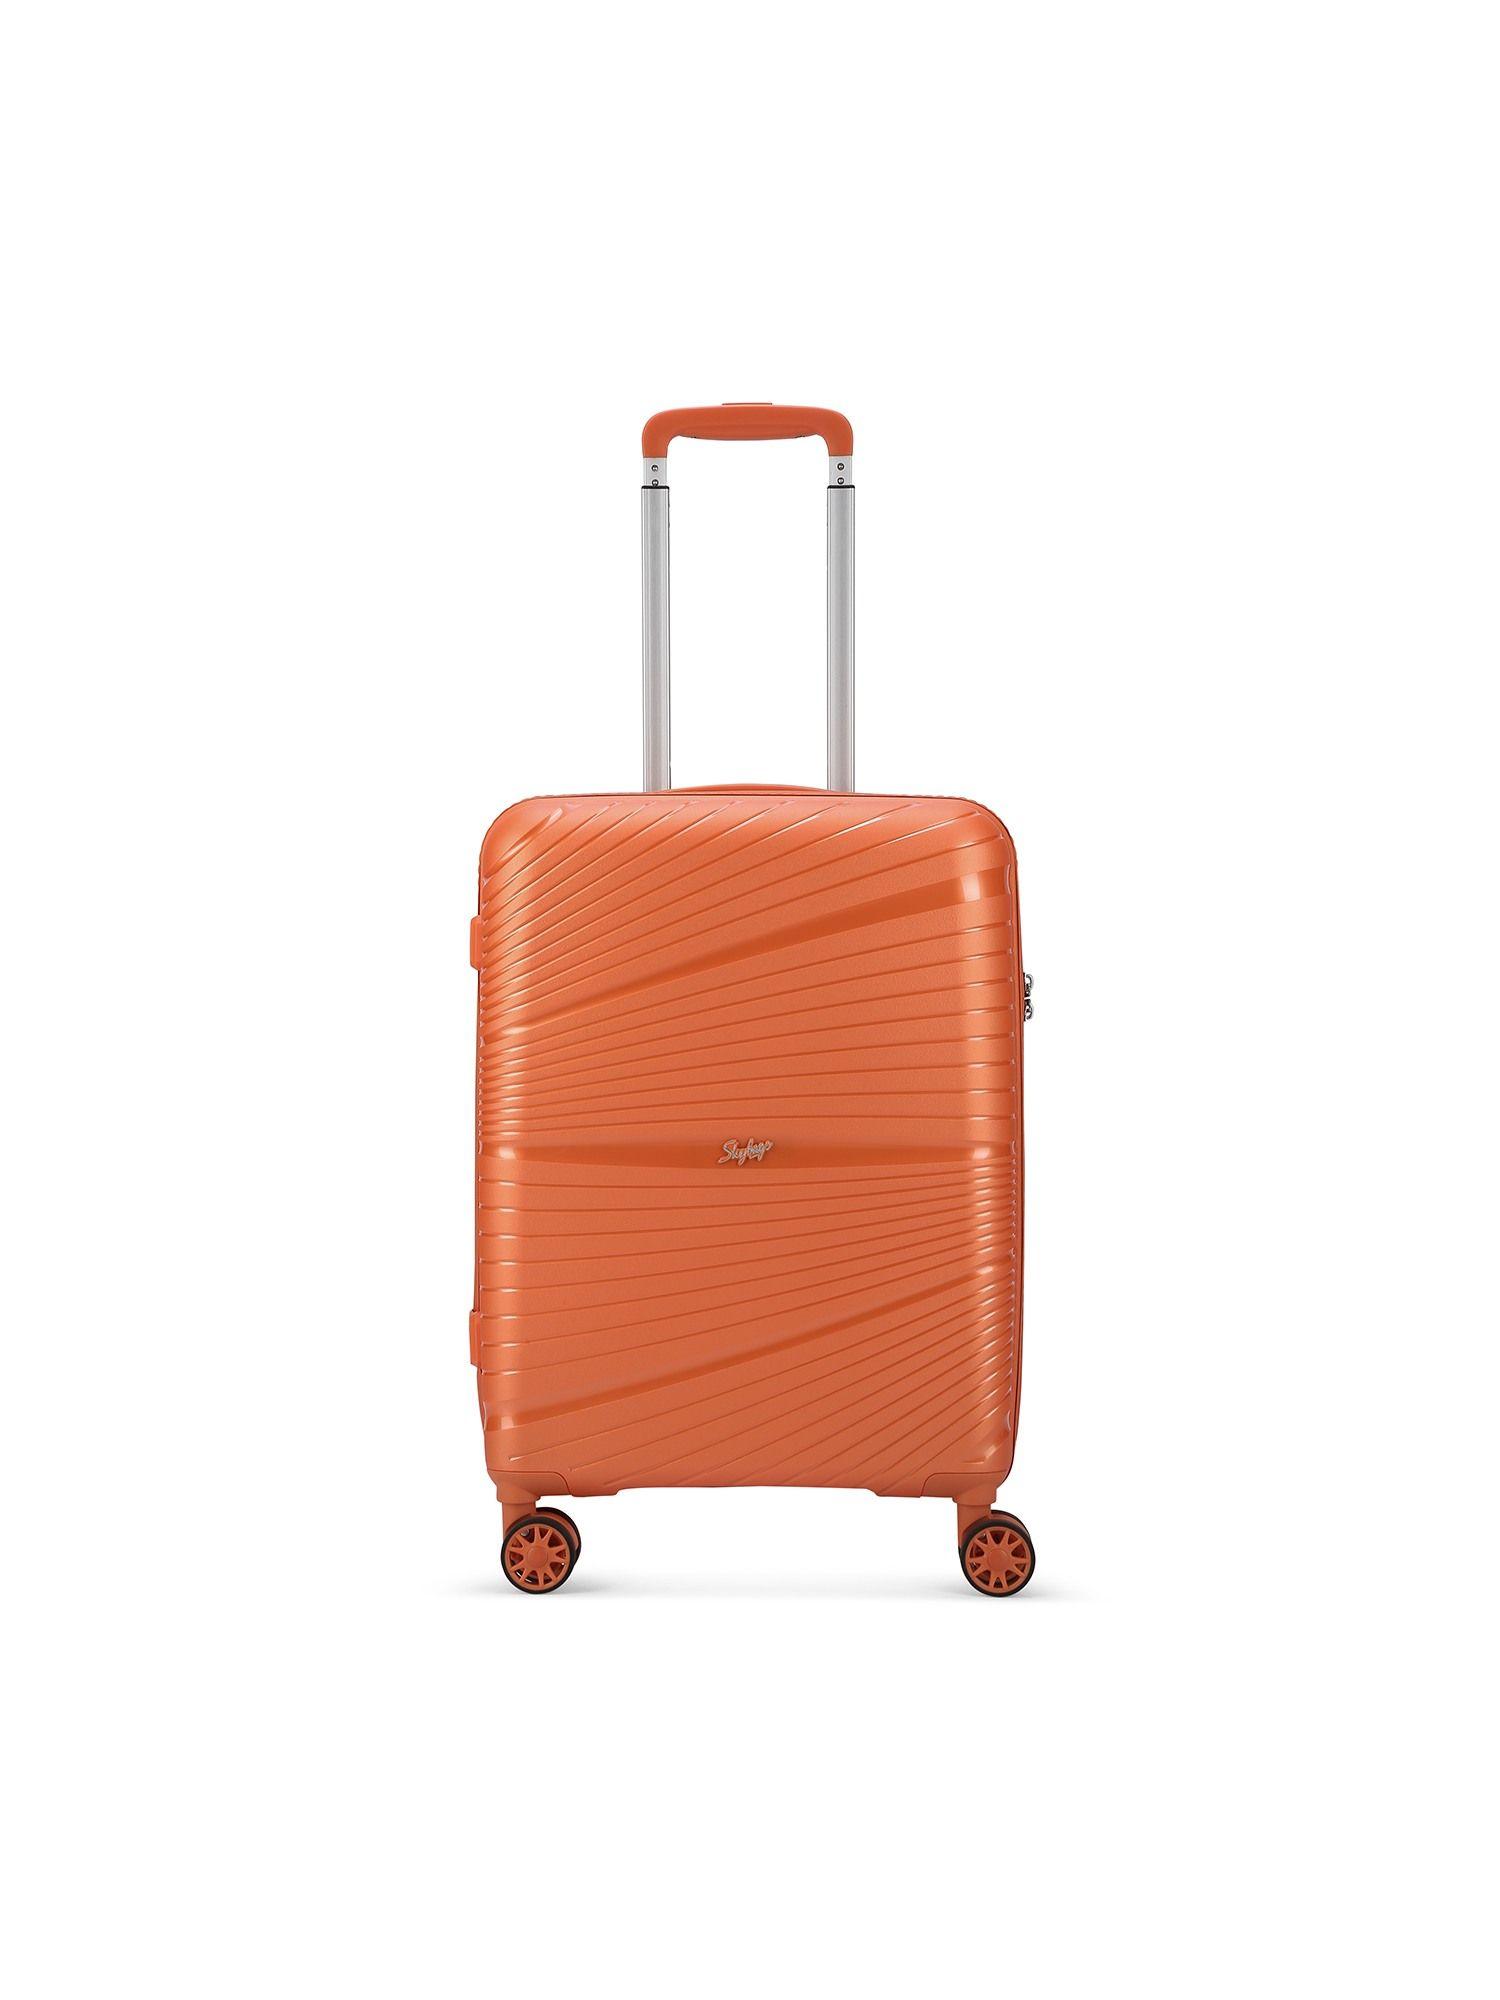 skylite orange hard luggage 8-wheel suitcase cabin trolley bags